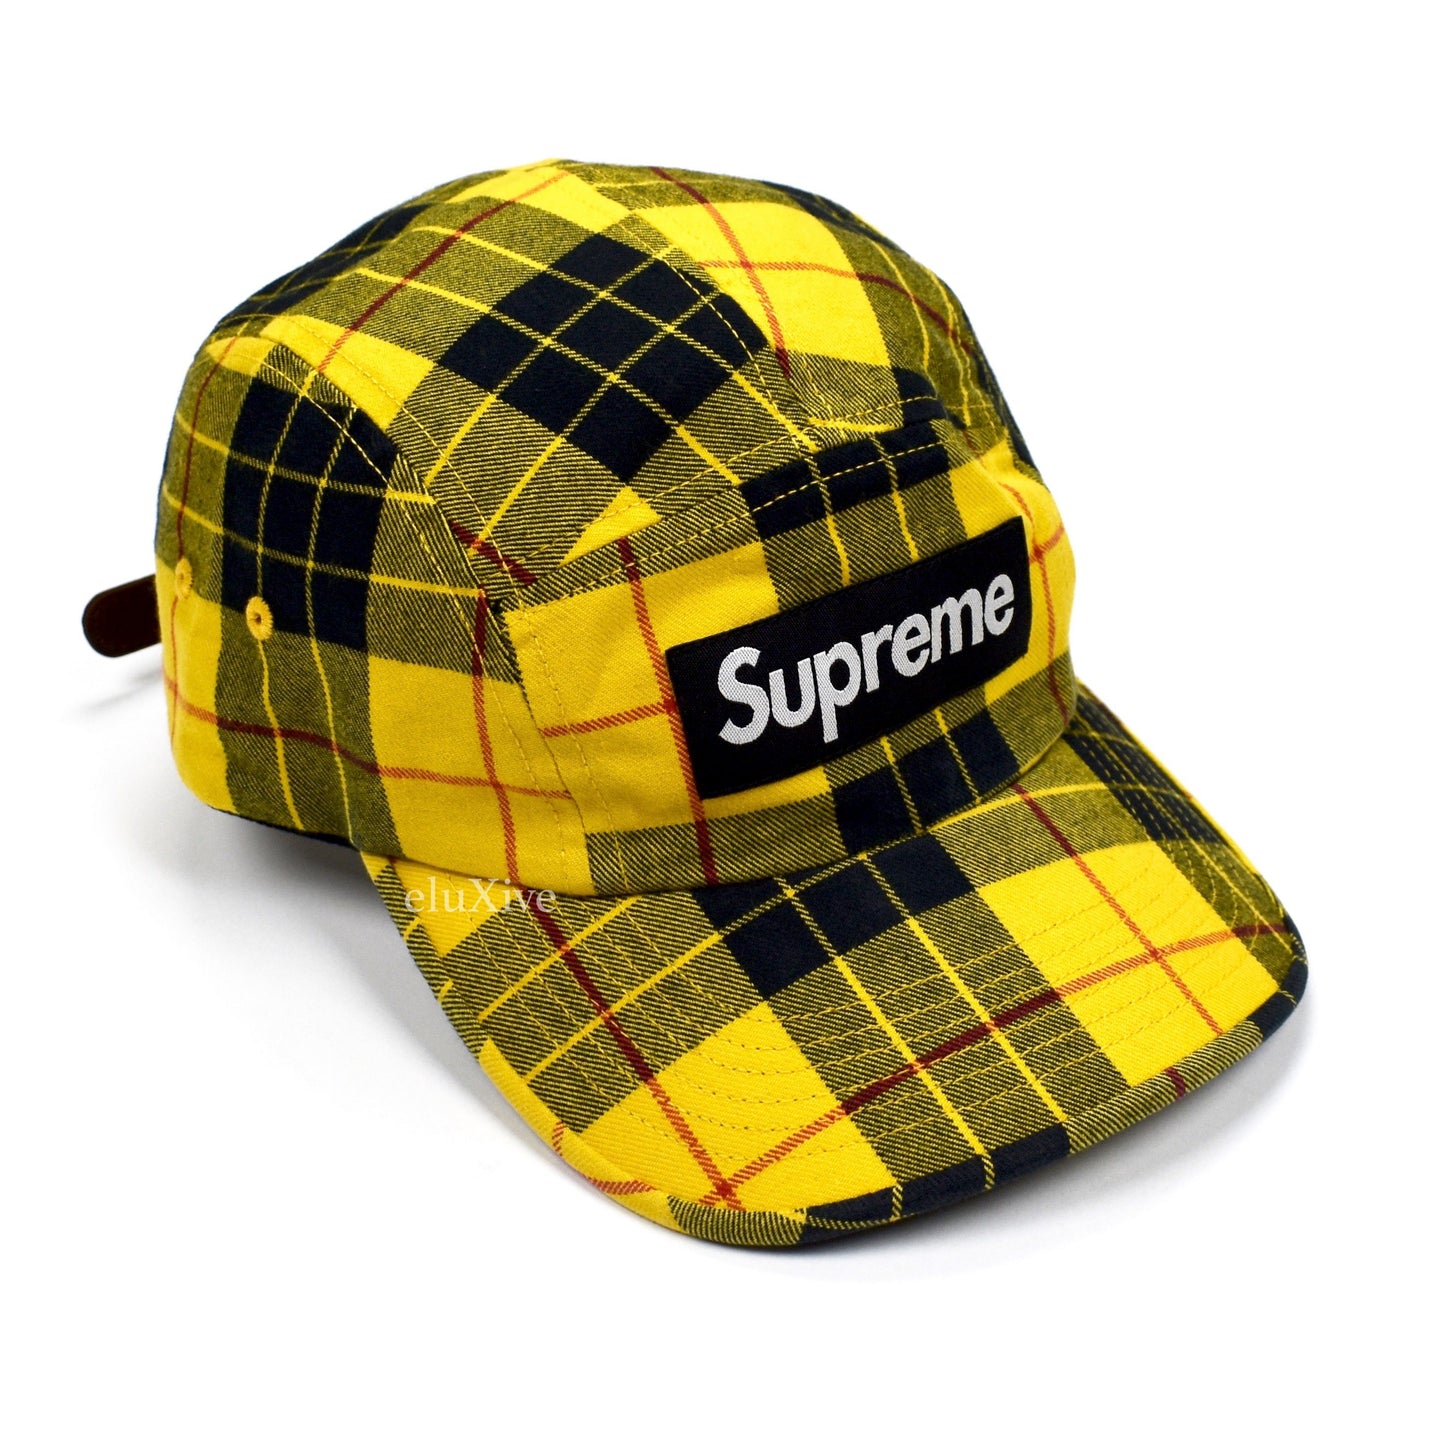 Supreme - Box Logo Washed Chino Twill Hat (Yellow Tartan)